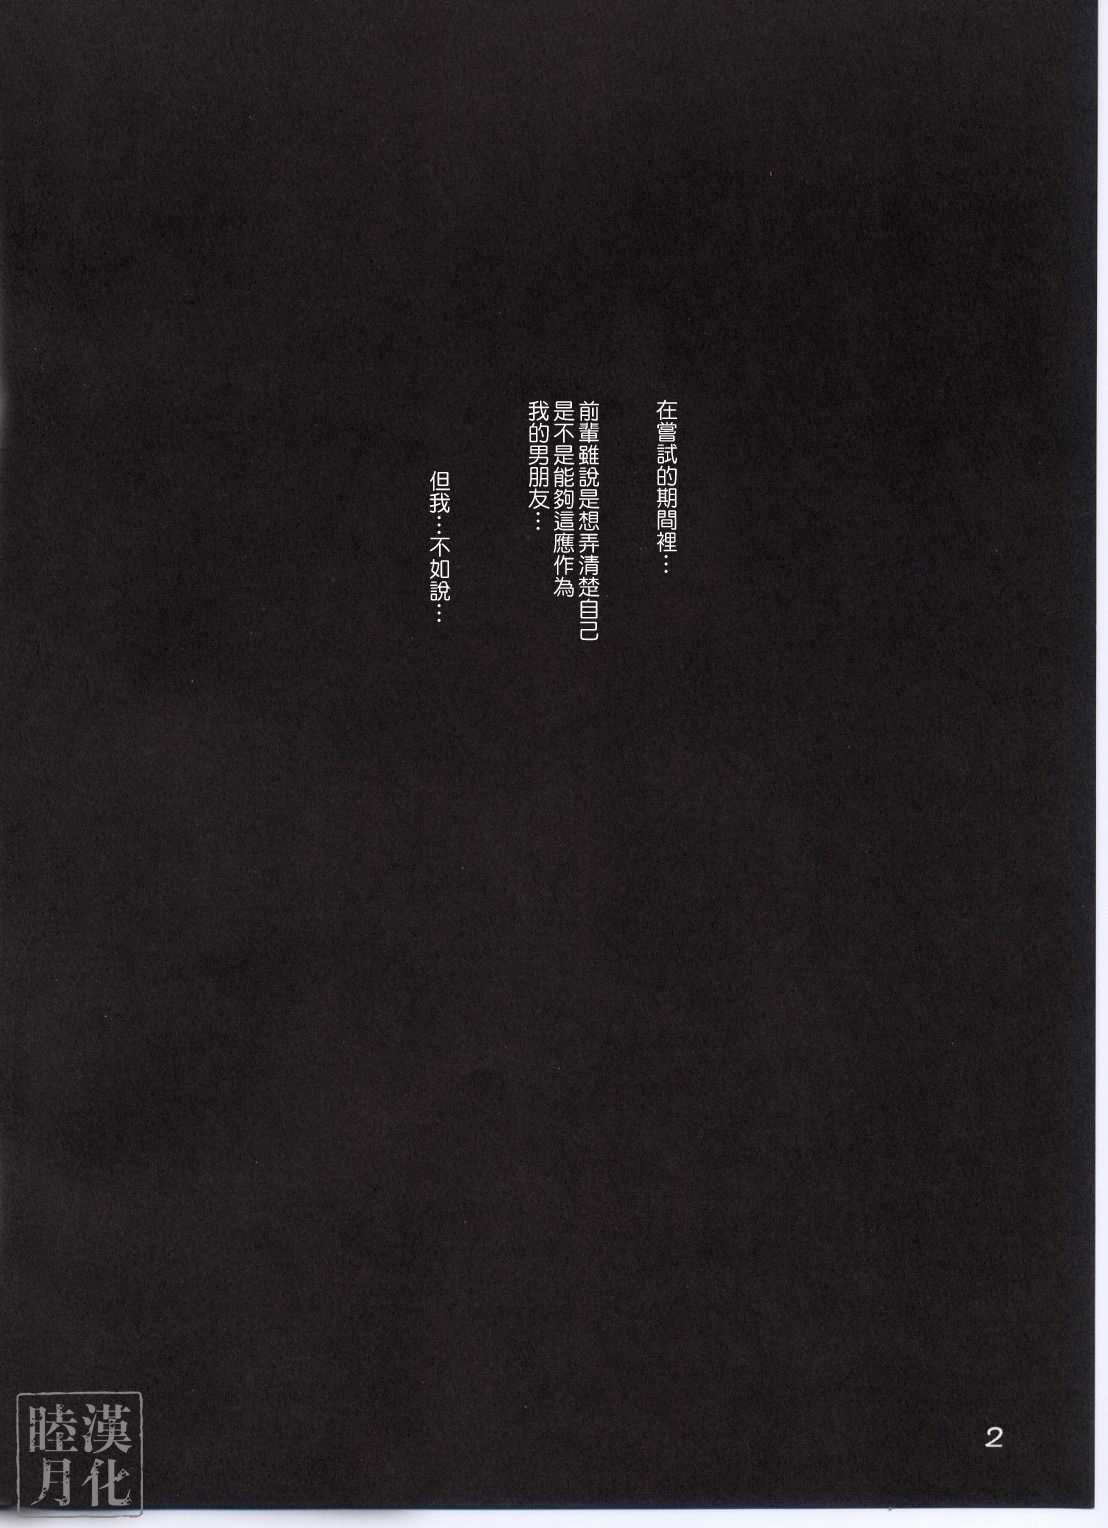 (C76) [G&#039;s studio (Kisaragi Gunma)] TETEO (Amagami)(chinese) (C76) (同人誌) [G&#039;s studio (如月群真)] TETEO (アマガミ)[中訳]